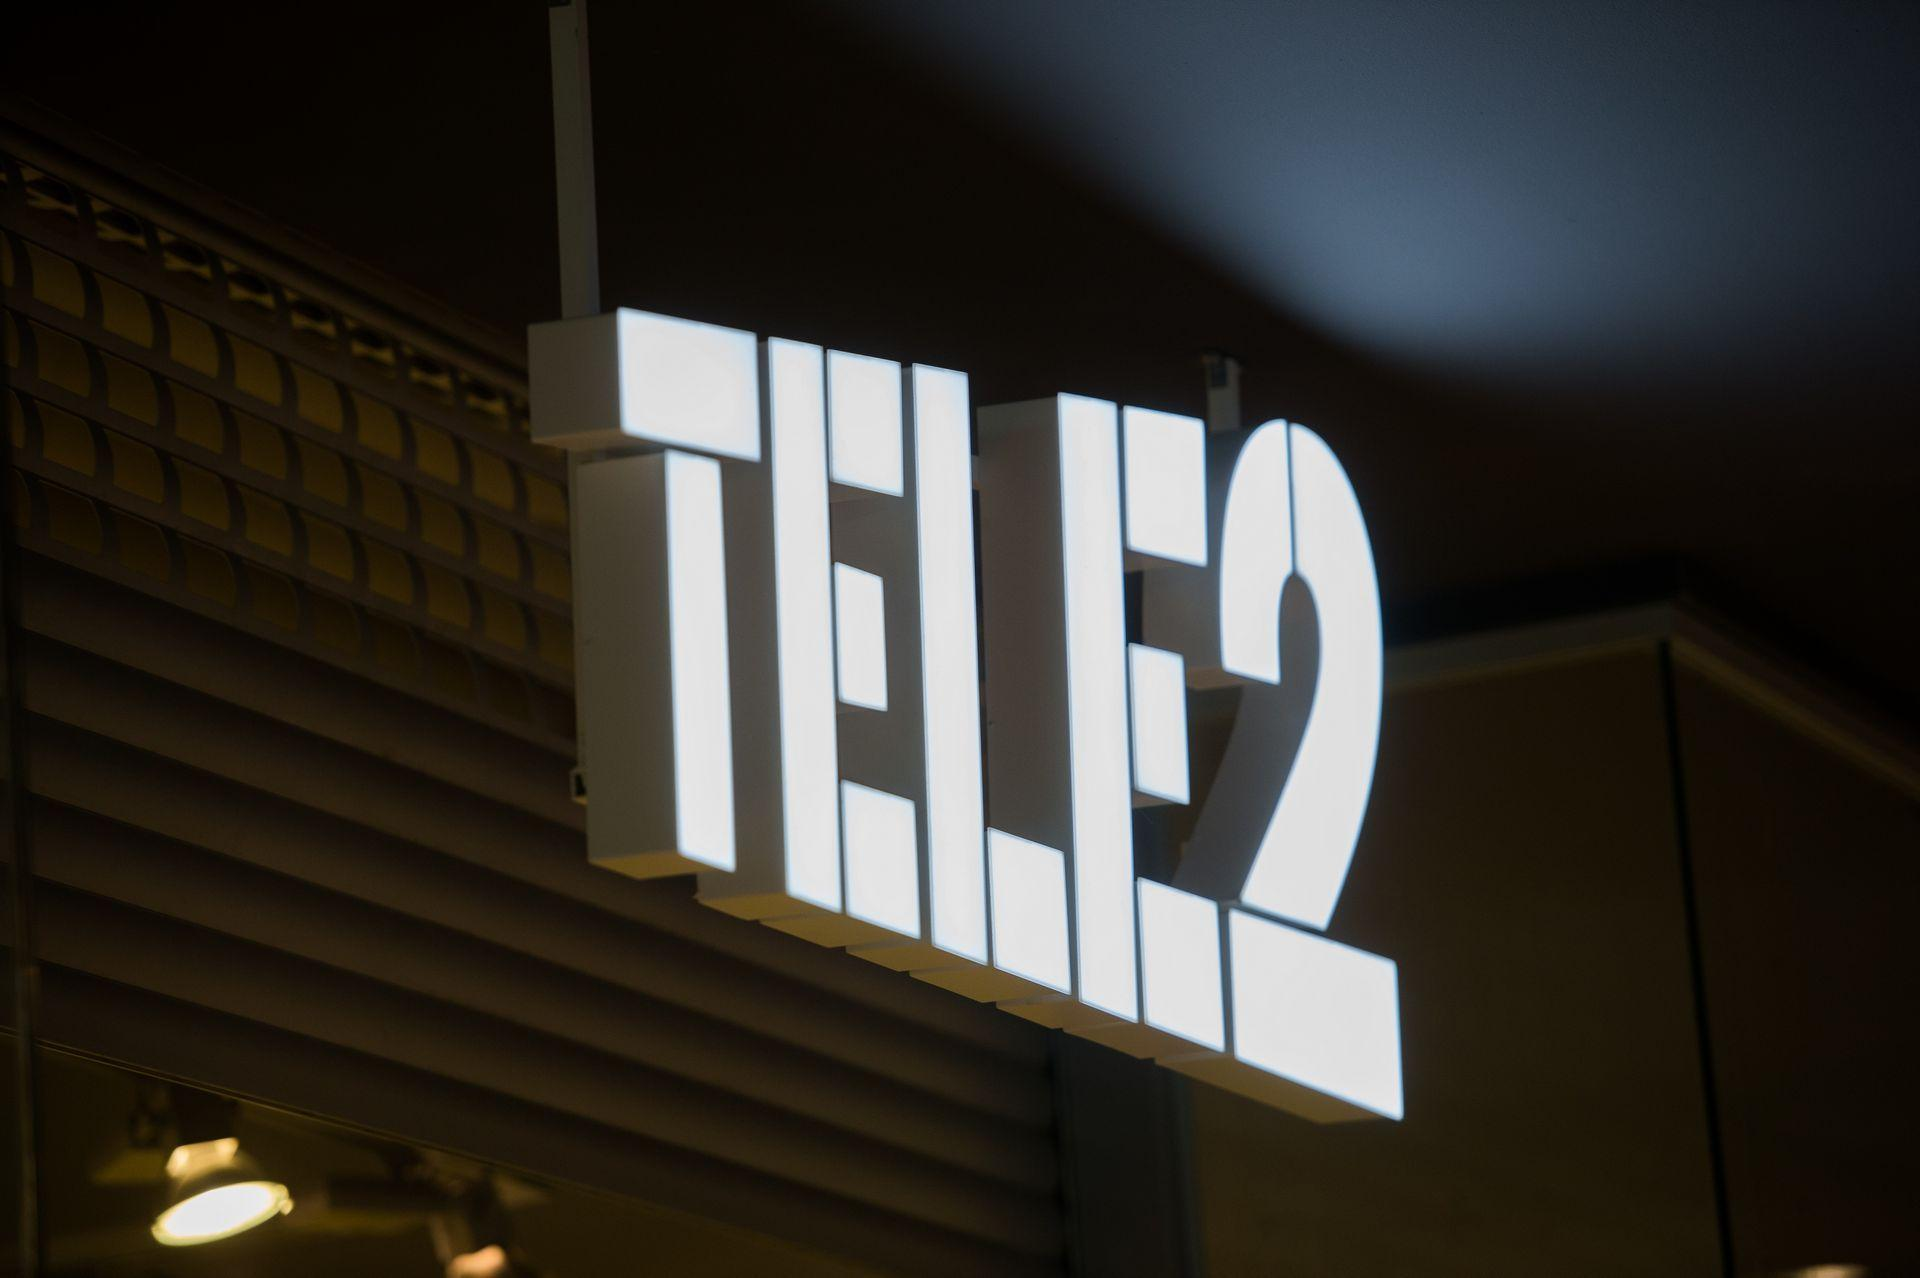 Tele2 ребрендинг. Т2 это теле2. Tele2 логотип. Теле2 фото. Теле2 ребрендинг.